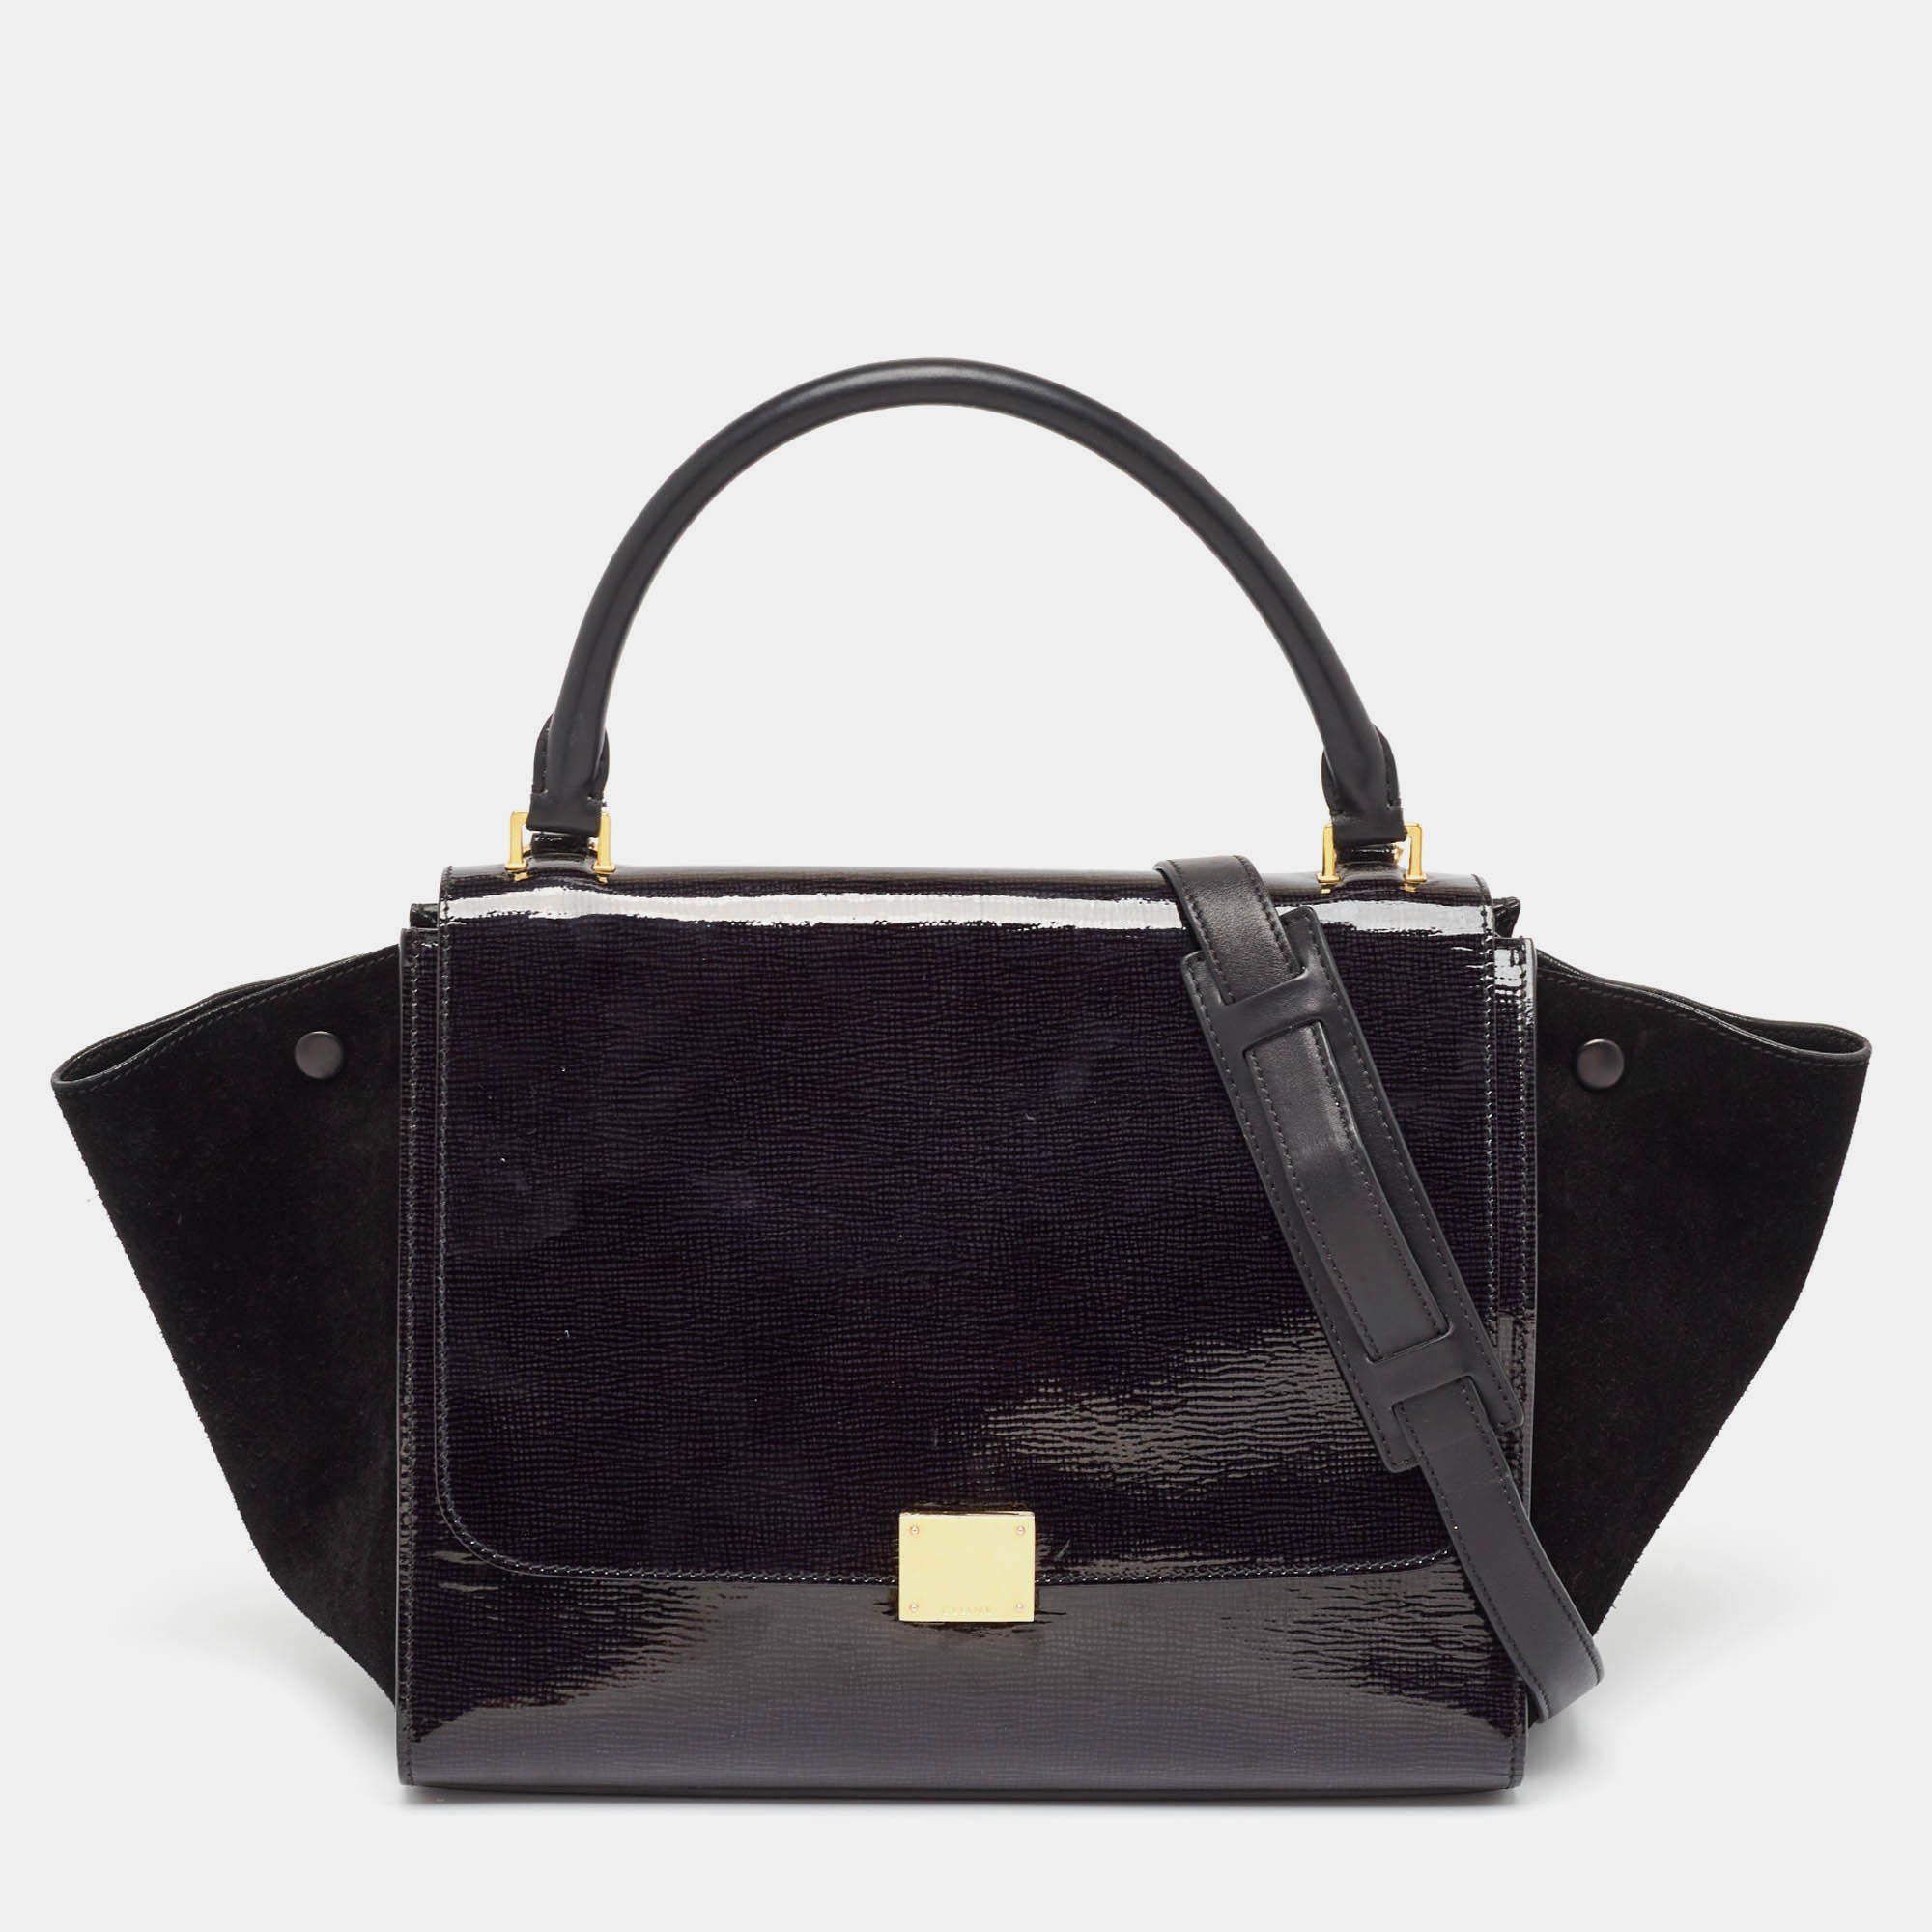 Celine black patent leather and suede medium trapeze bag